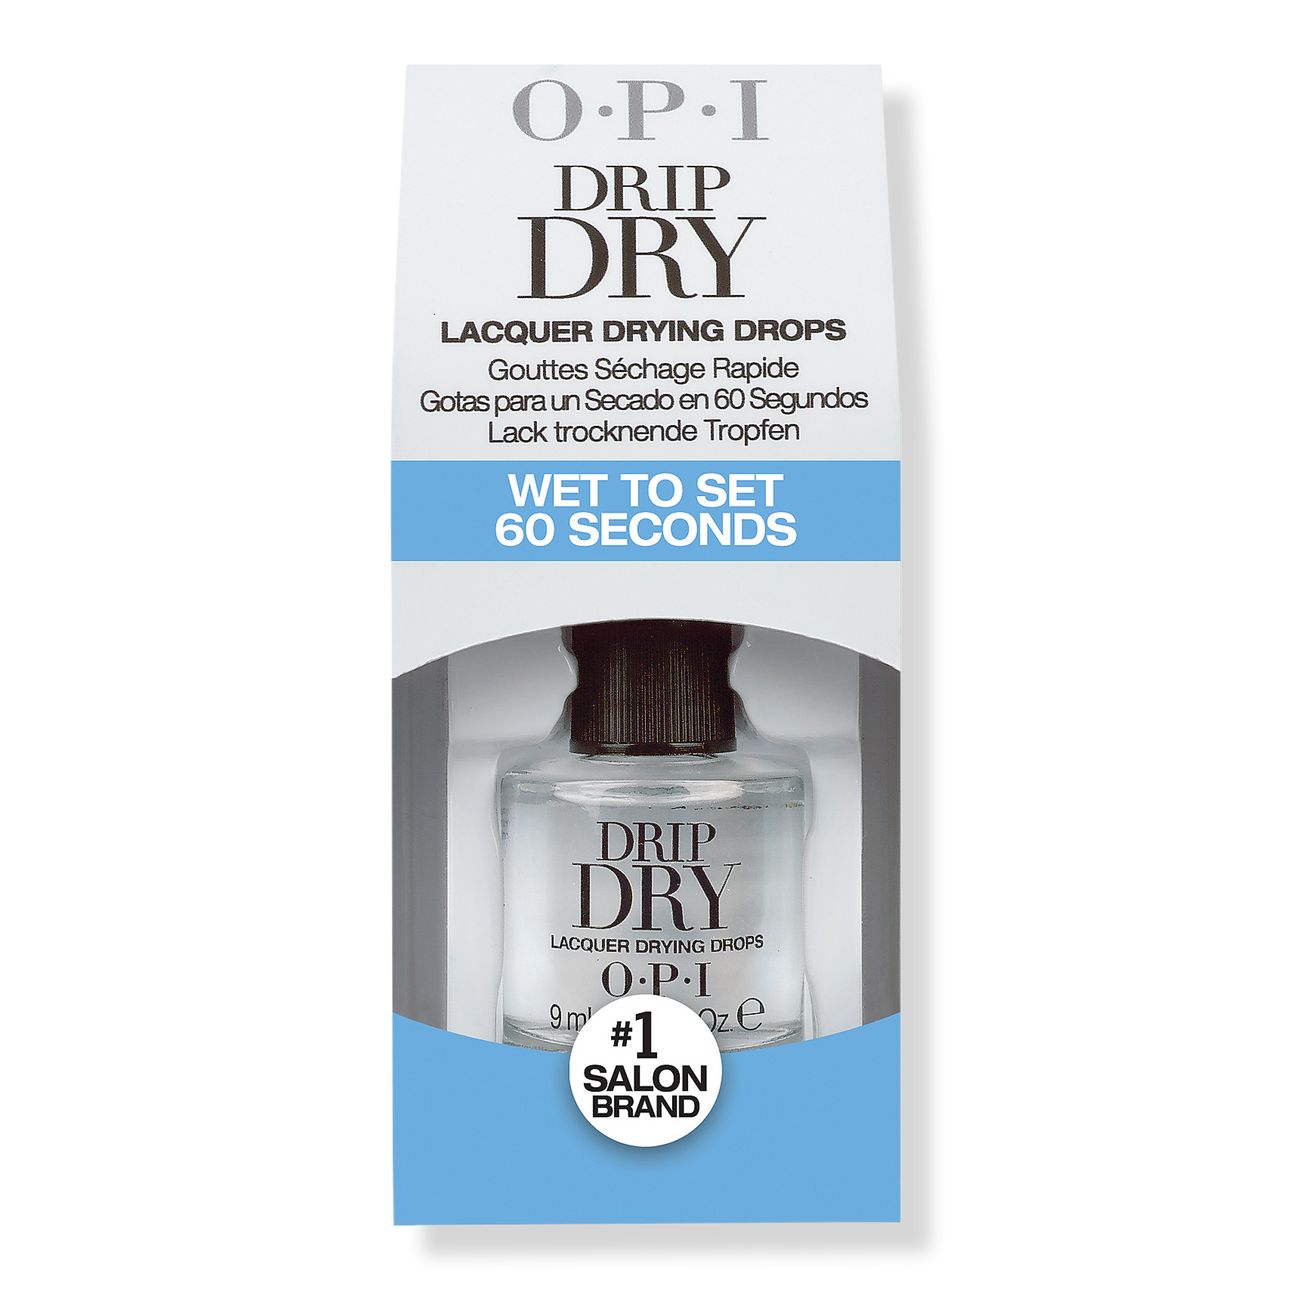 Drip Dry Lacquer Drying Drops | Ulta